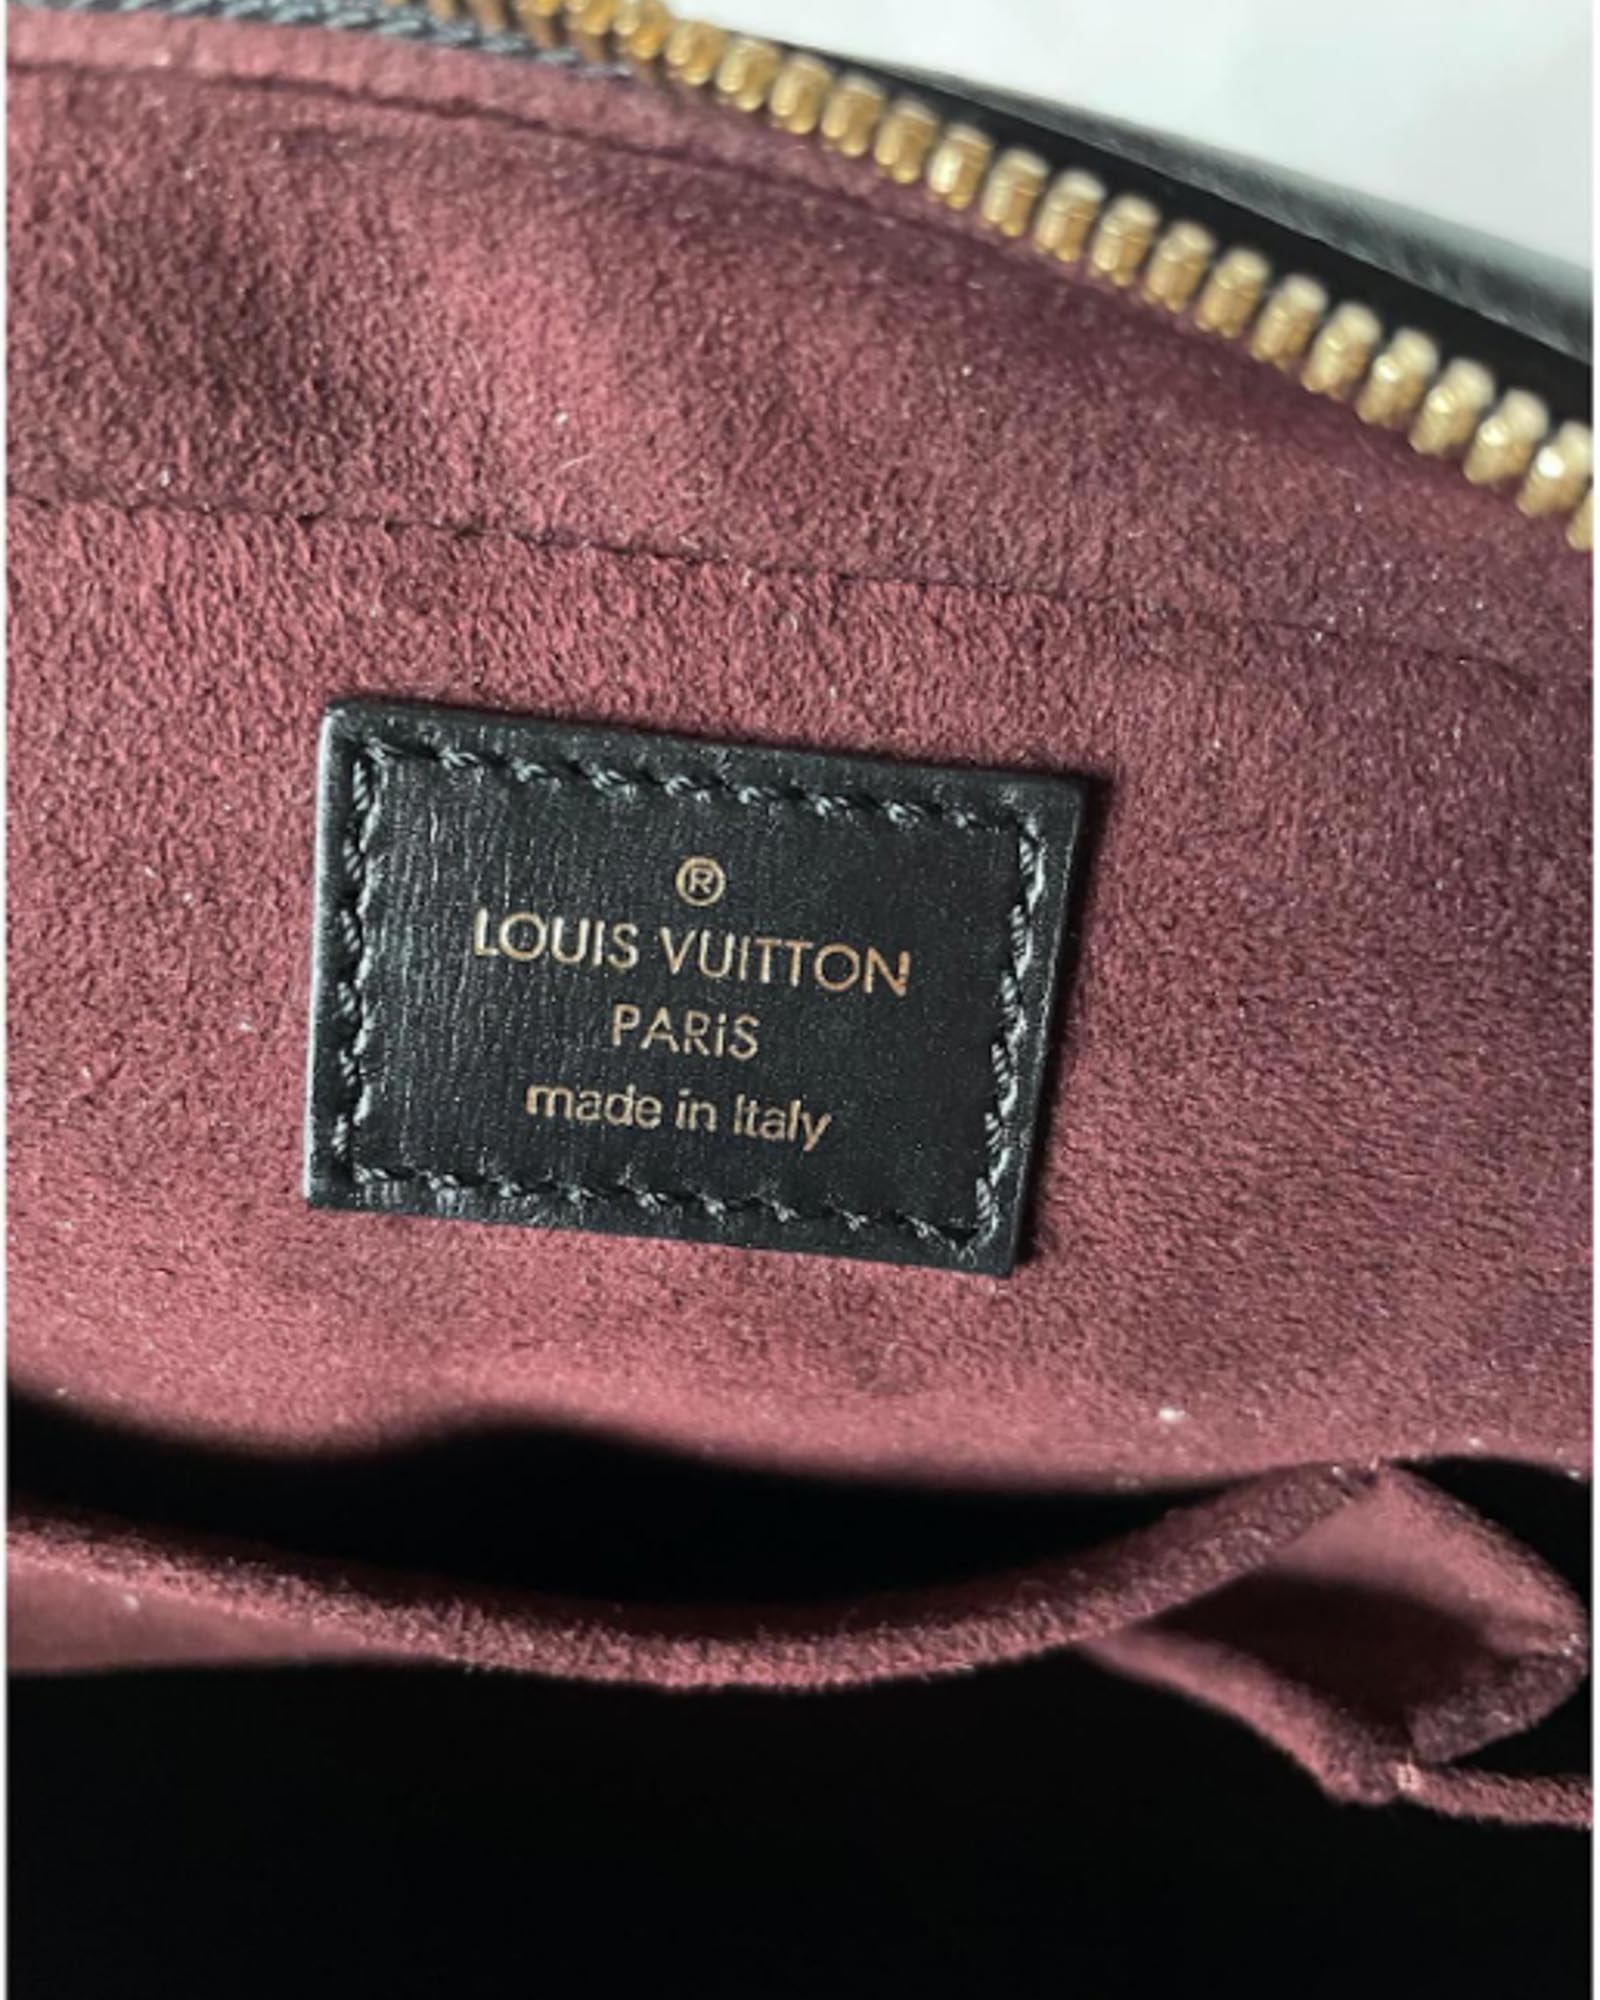 LOUIS VUITTON Mizi Vienna Monogram Leather Satchel Bag Black